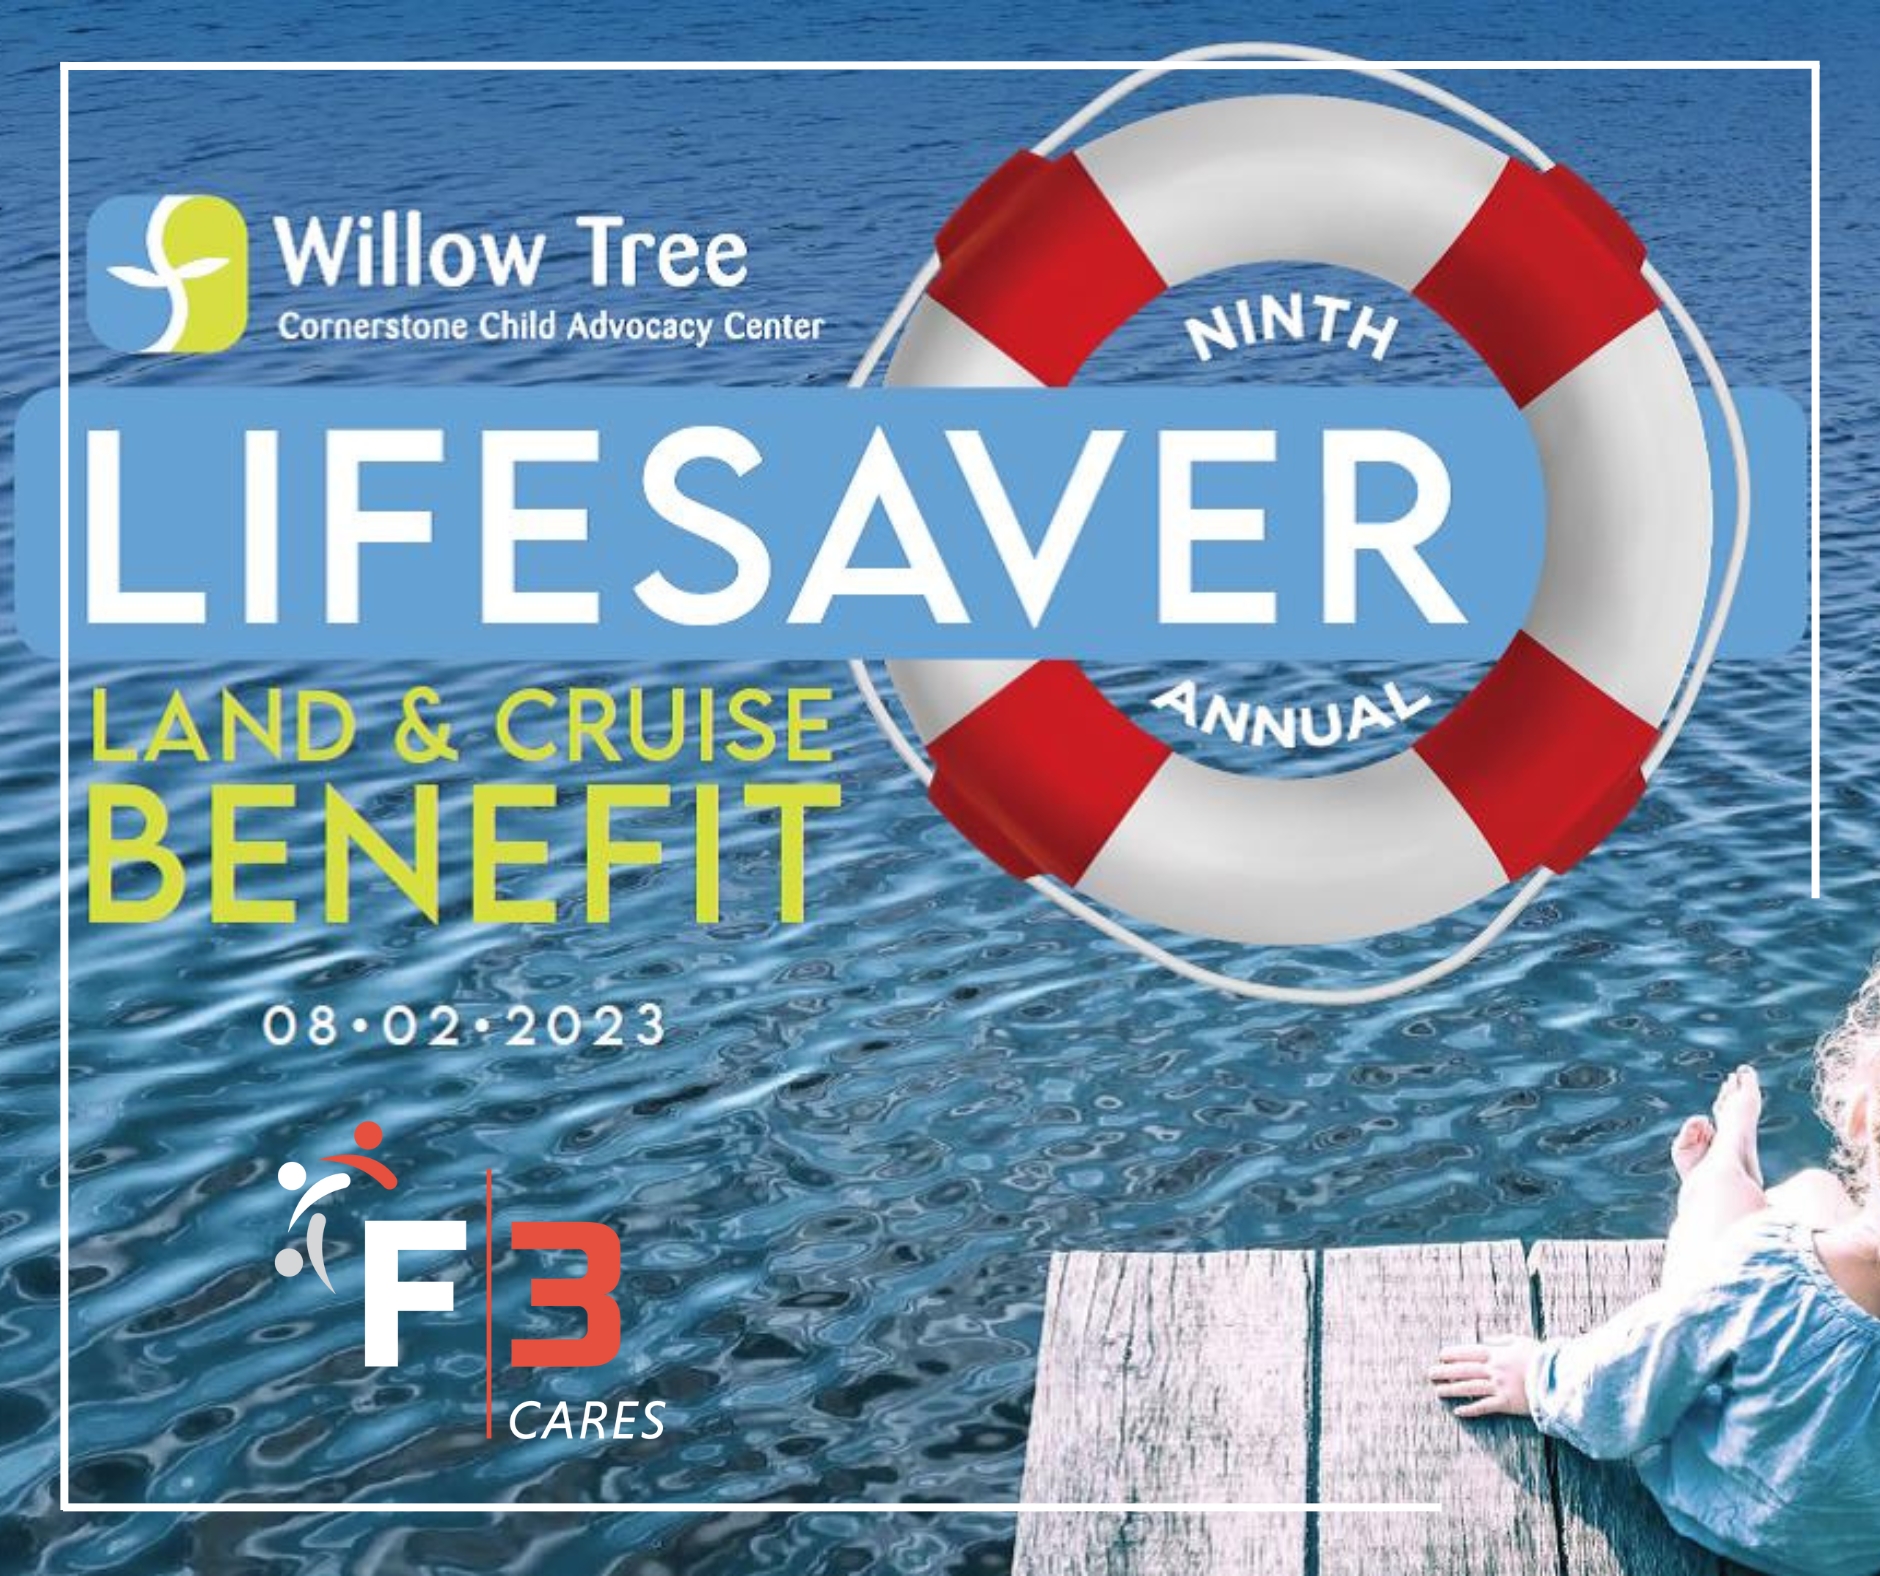 Willow Tree Lifesaver Event